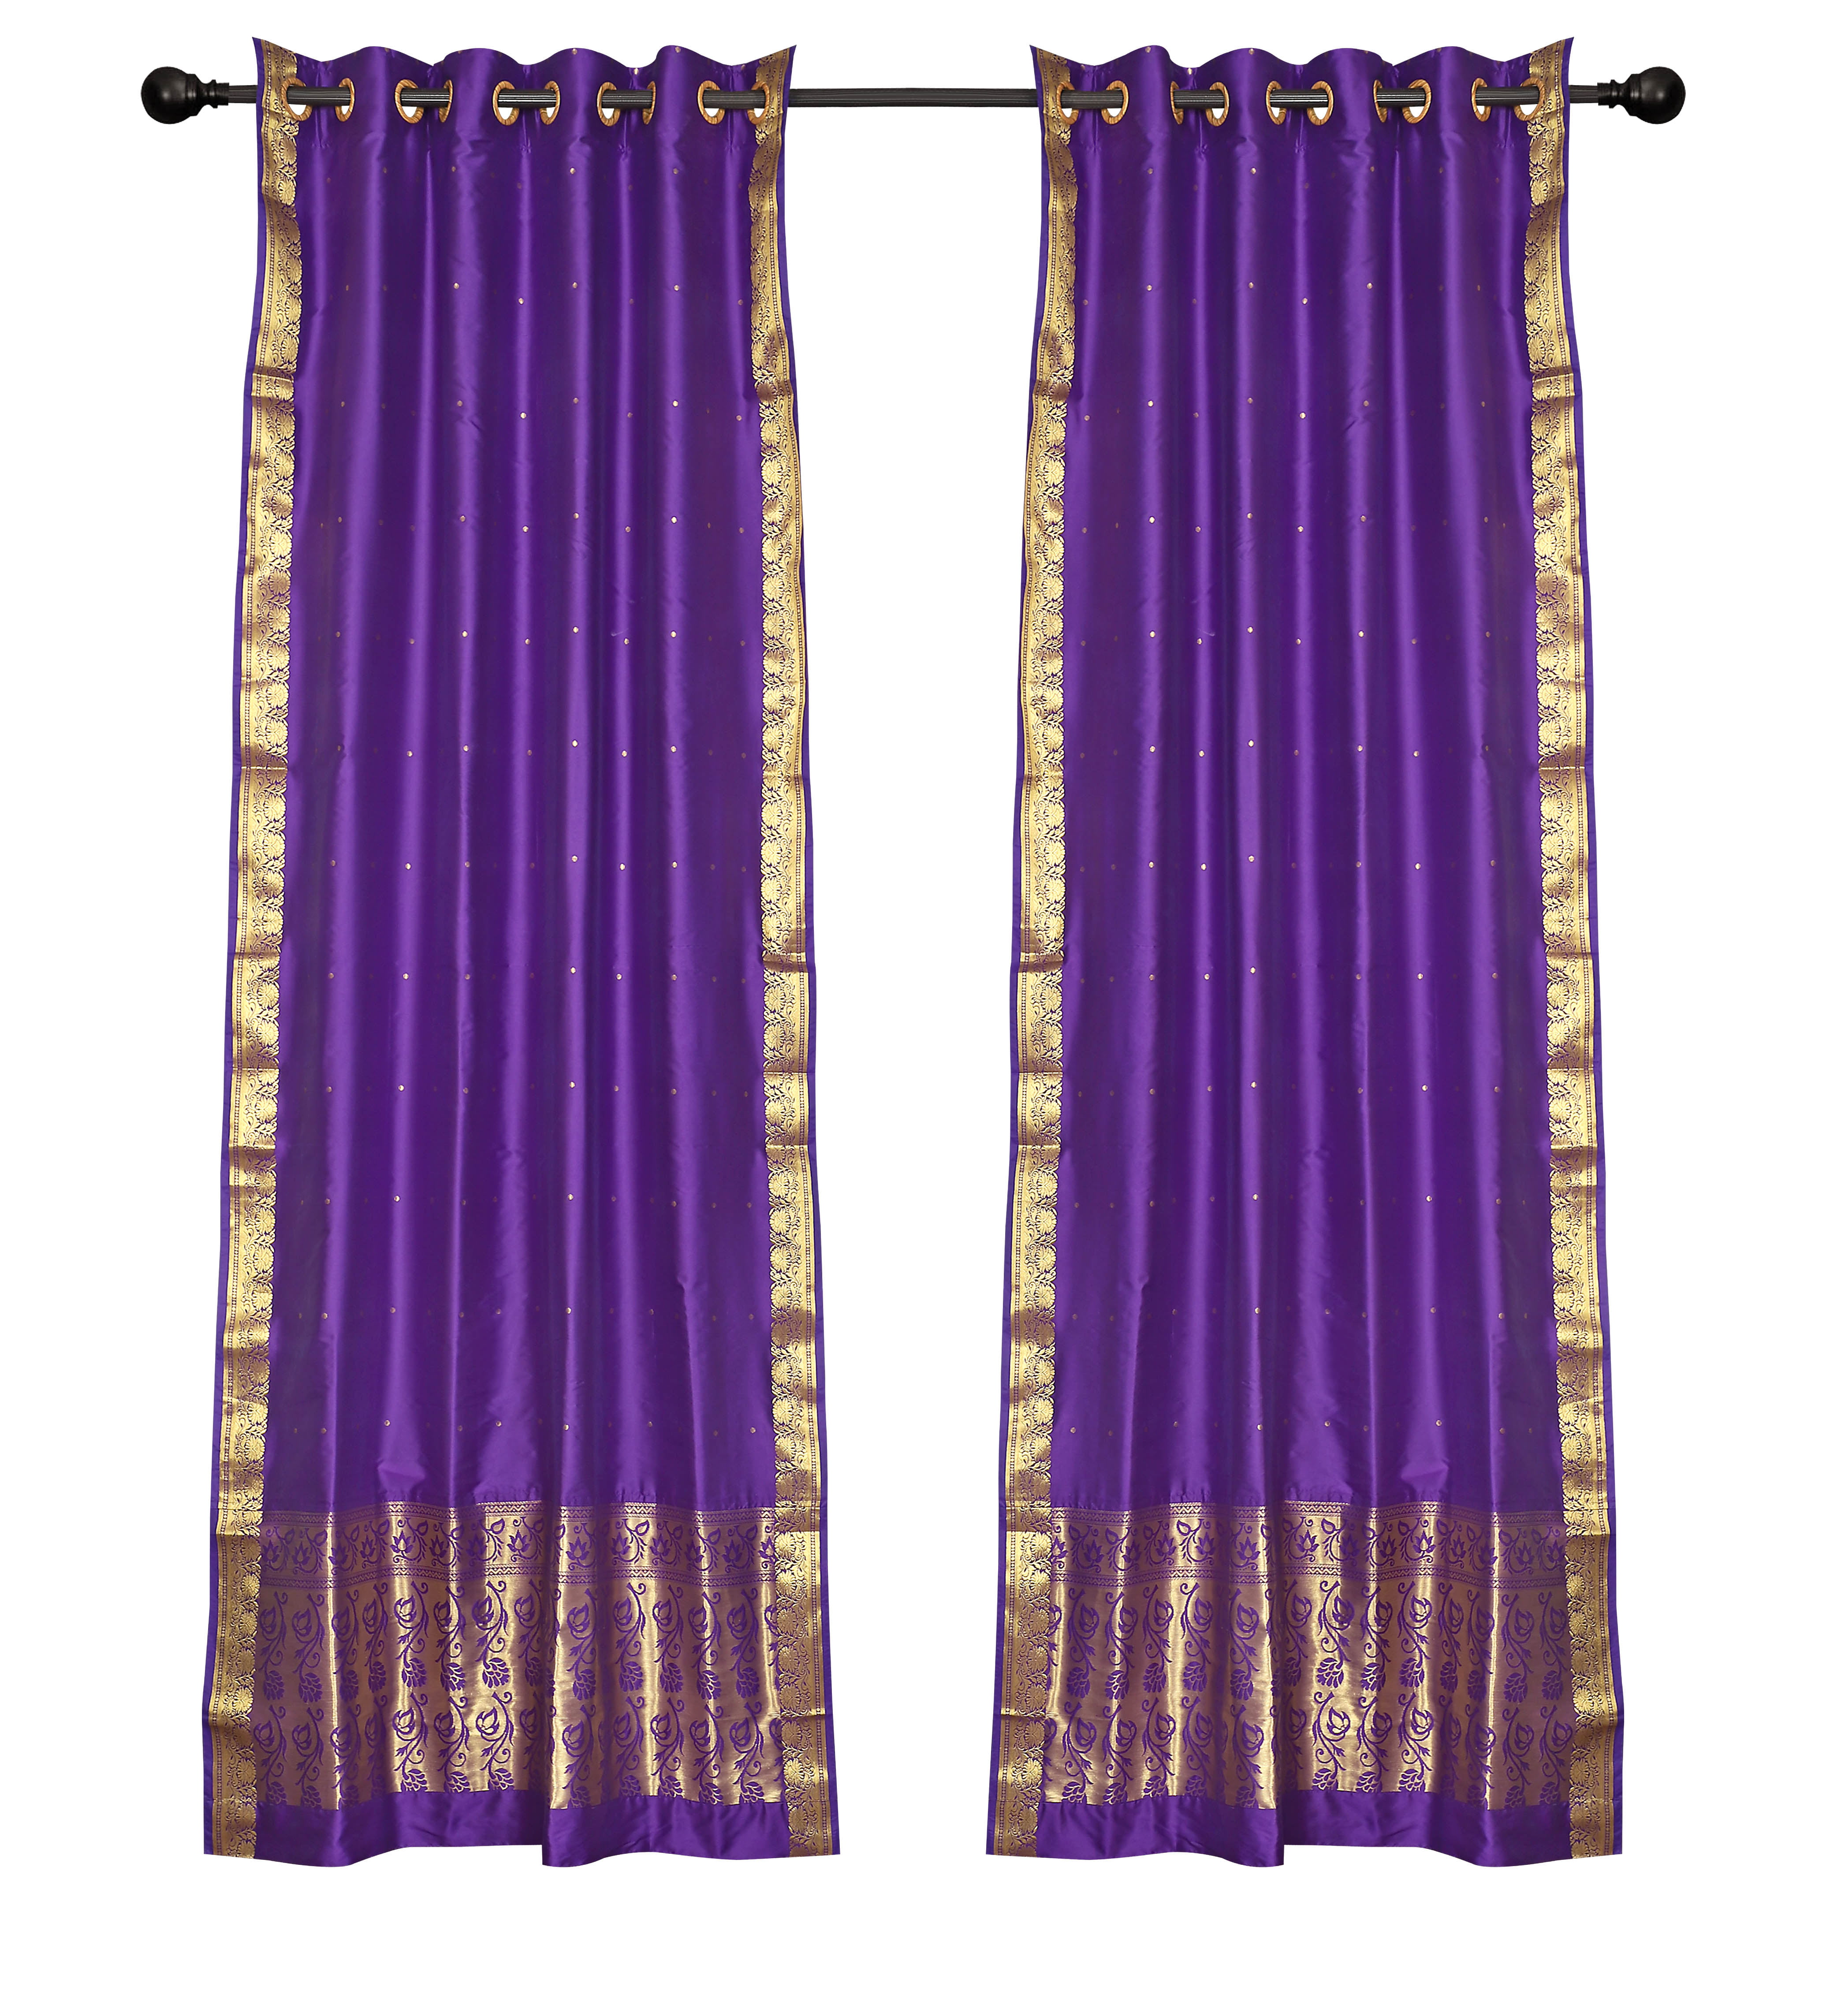 2 Boho Purple Indian Sari Curtains Ring Top Window Panels Drapes ...